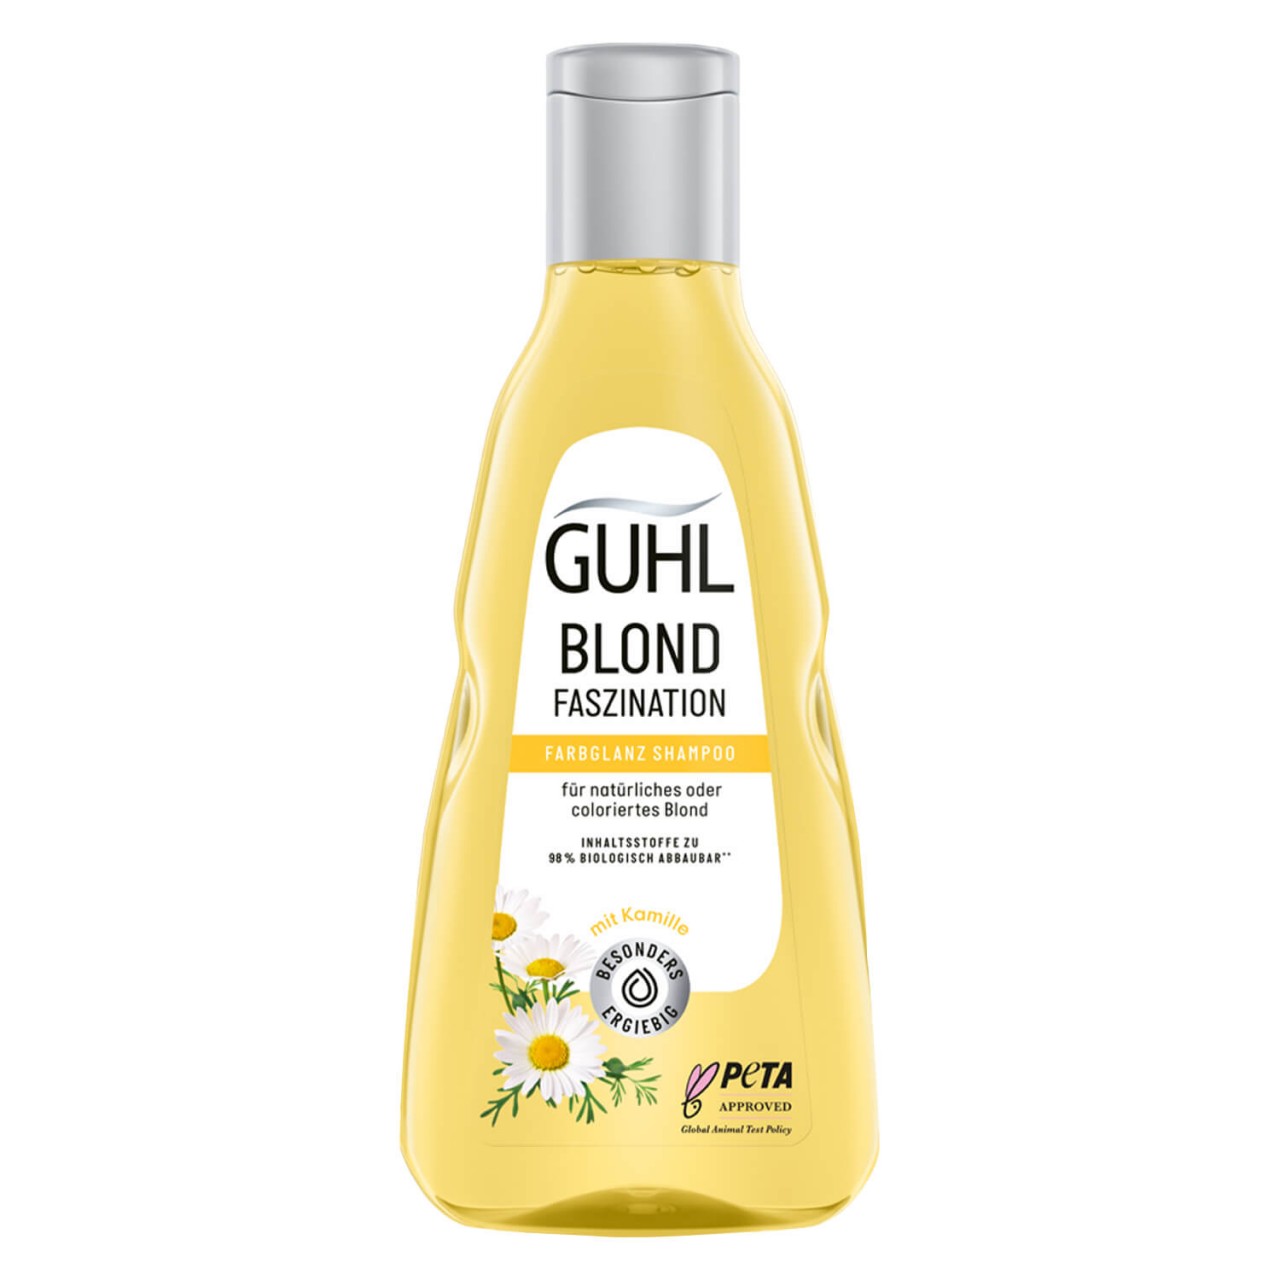 GUHL - BLOND FASZINATION Farbglanz Shampoo von GUHL